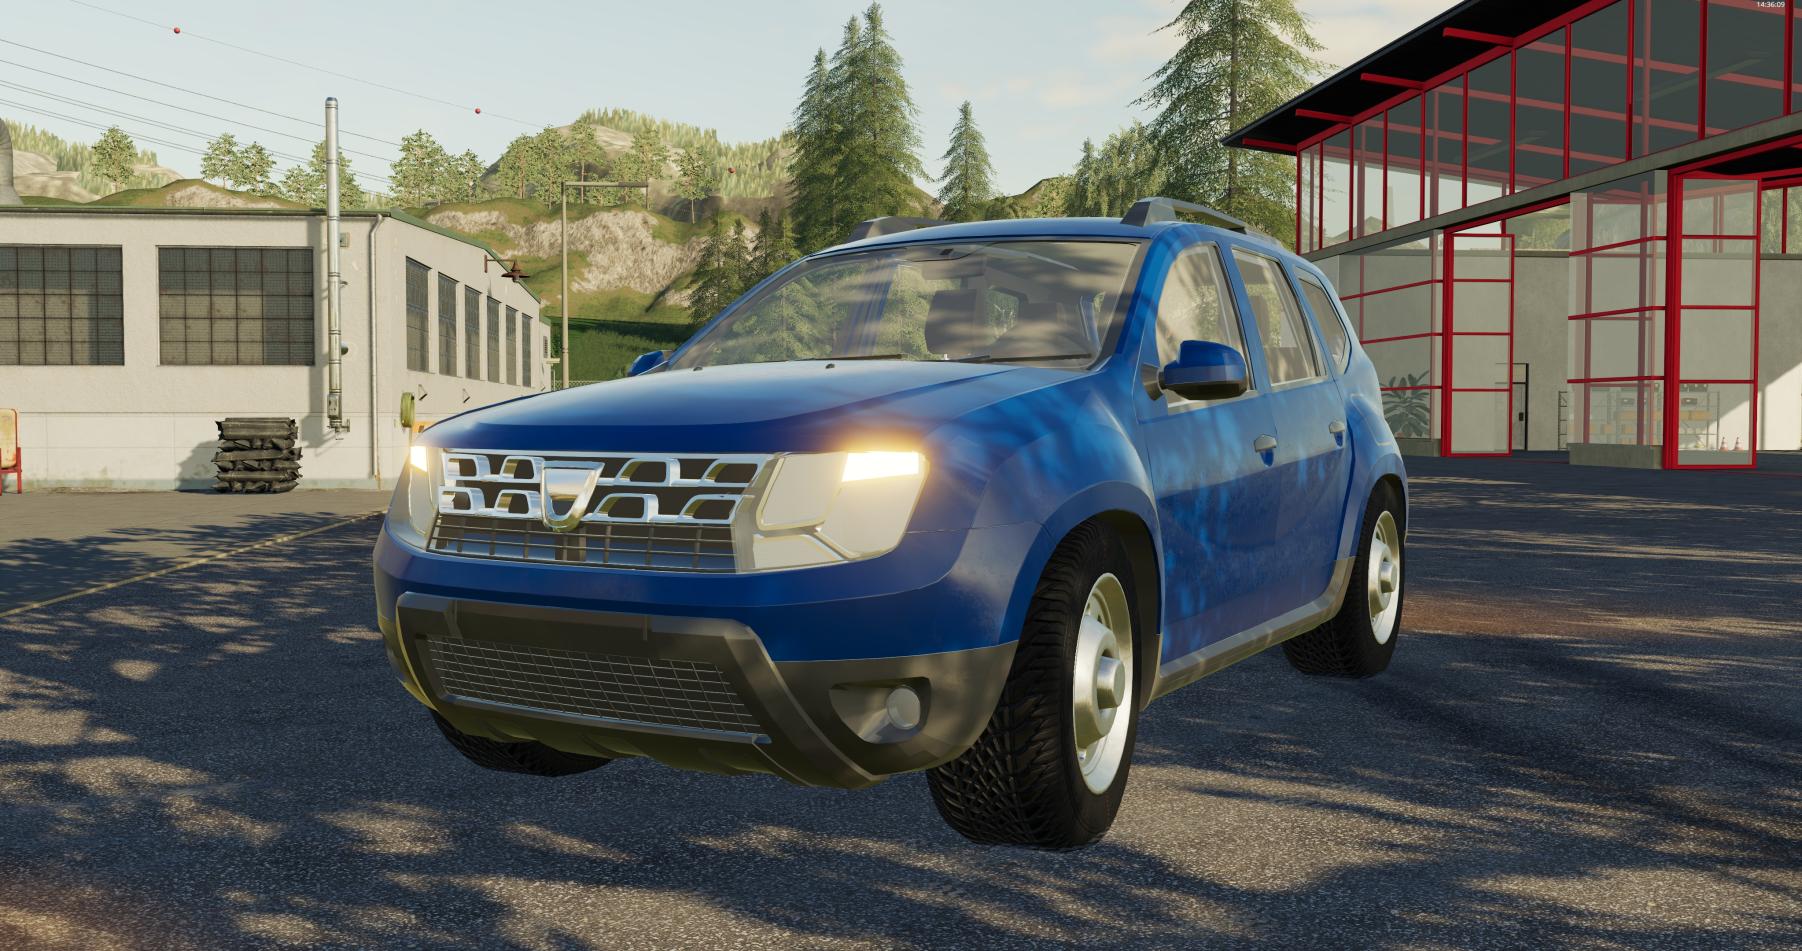 Dacia Duster 2015 Dci V1.0 FS19 | Landwirtschafts Simulator 19 Mods